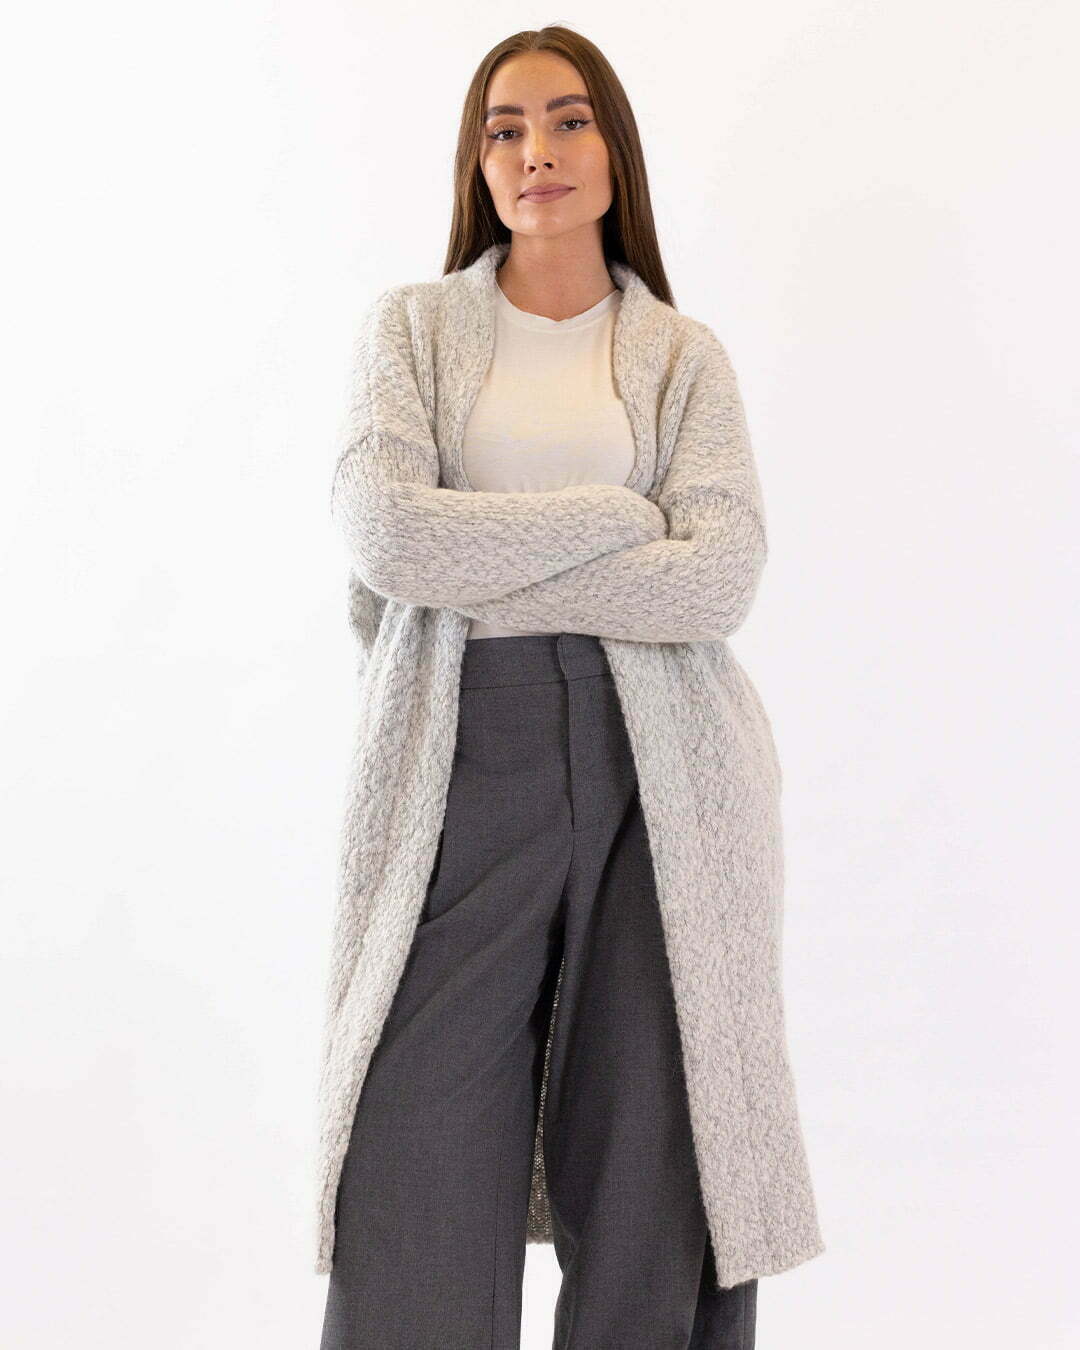 Zara Knitted Cardigan